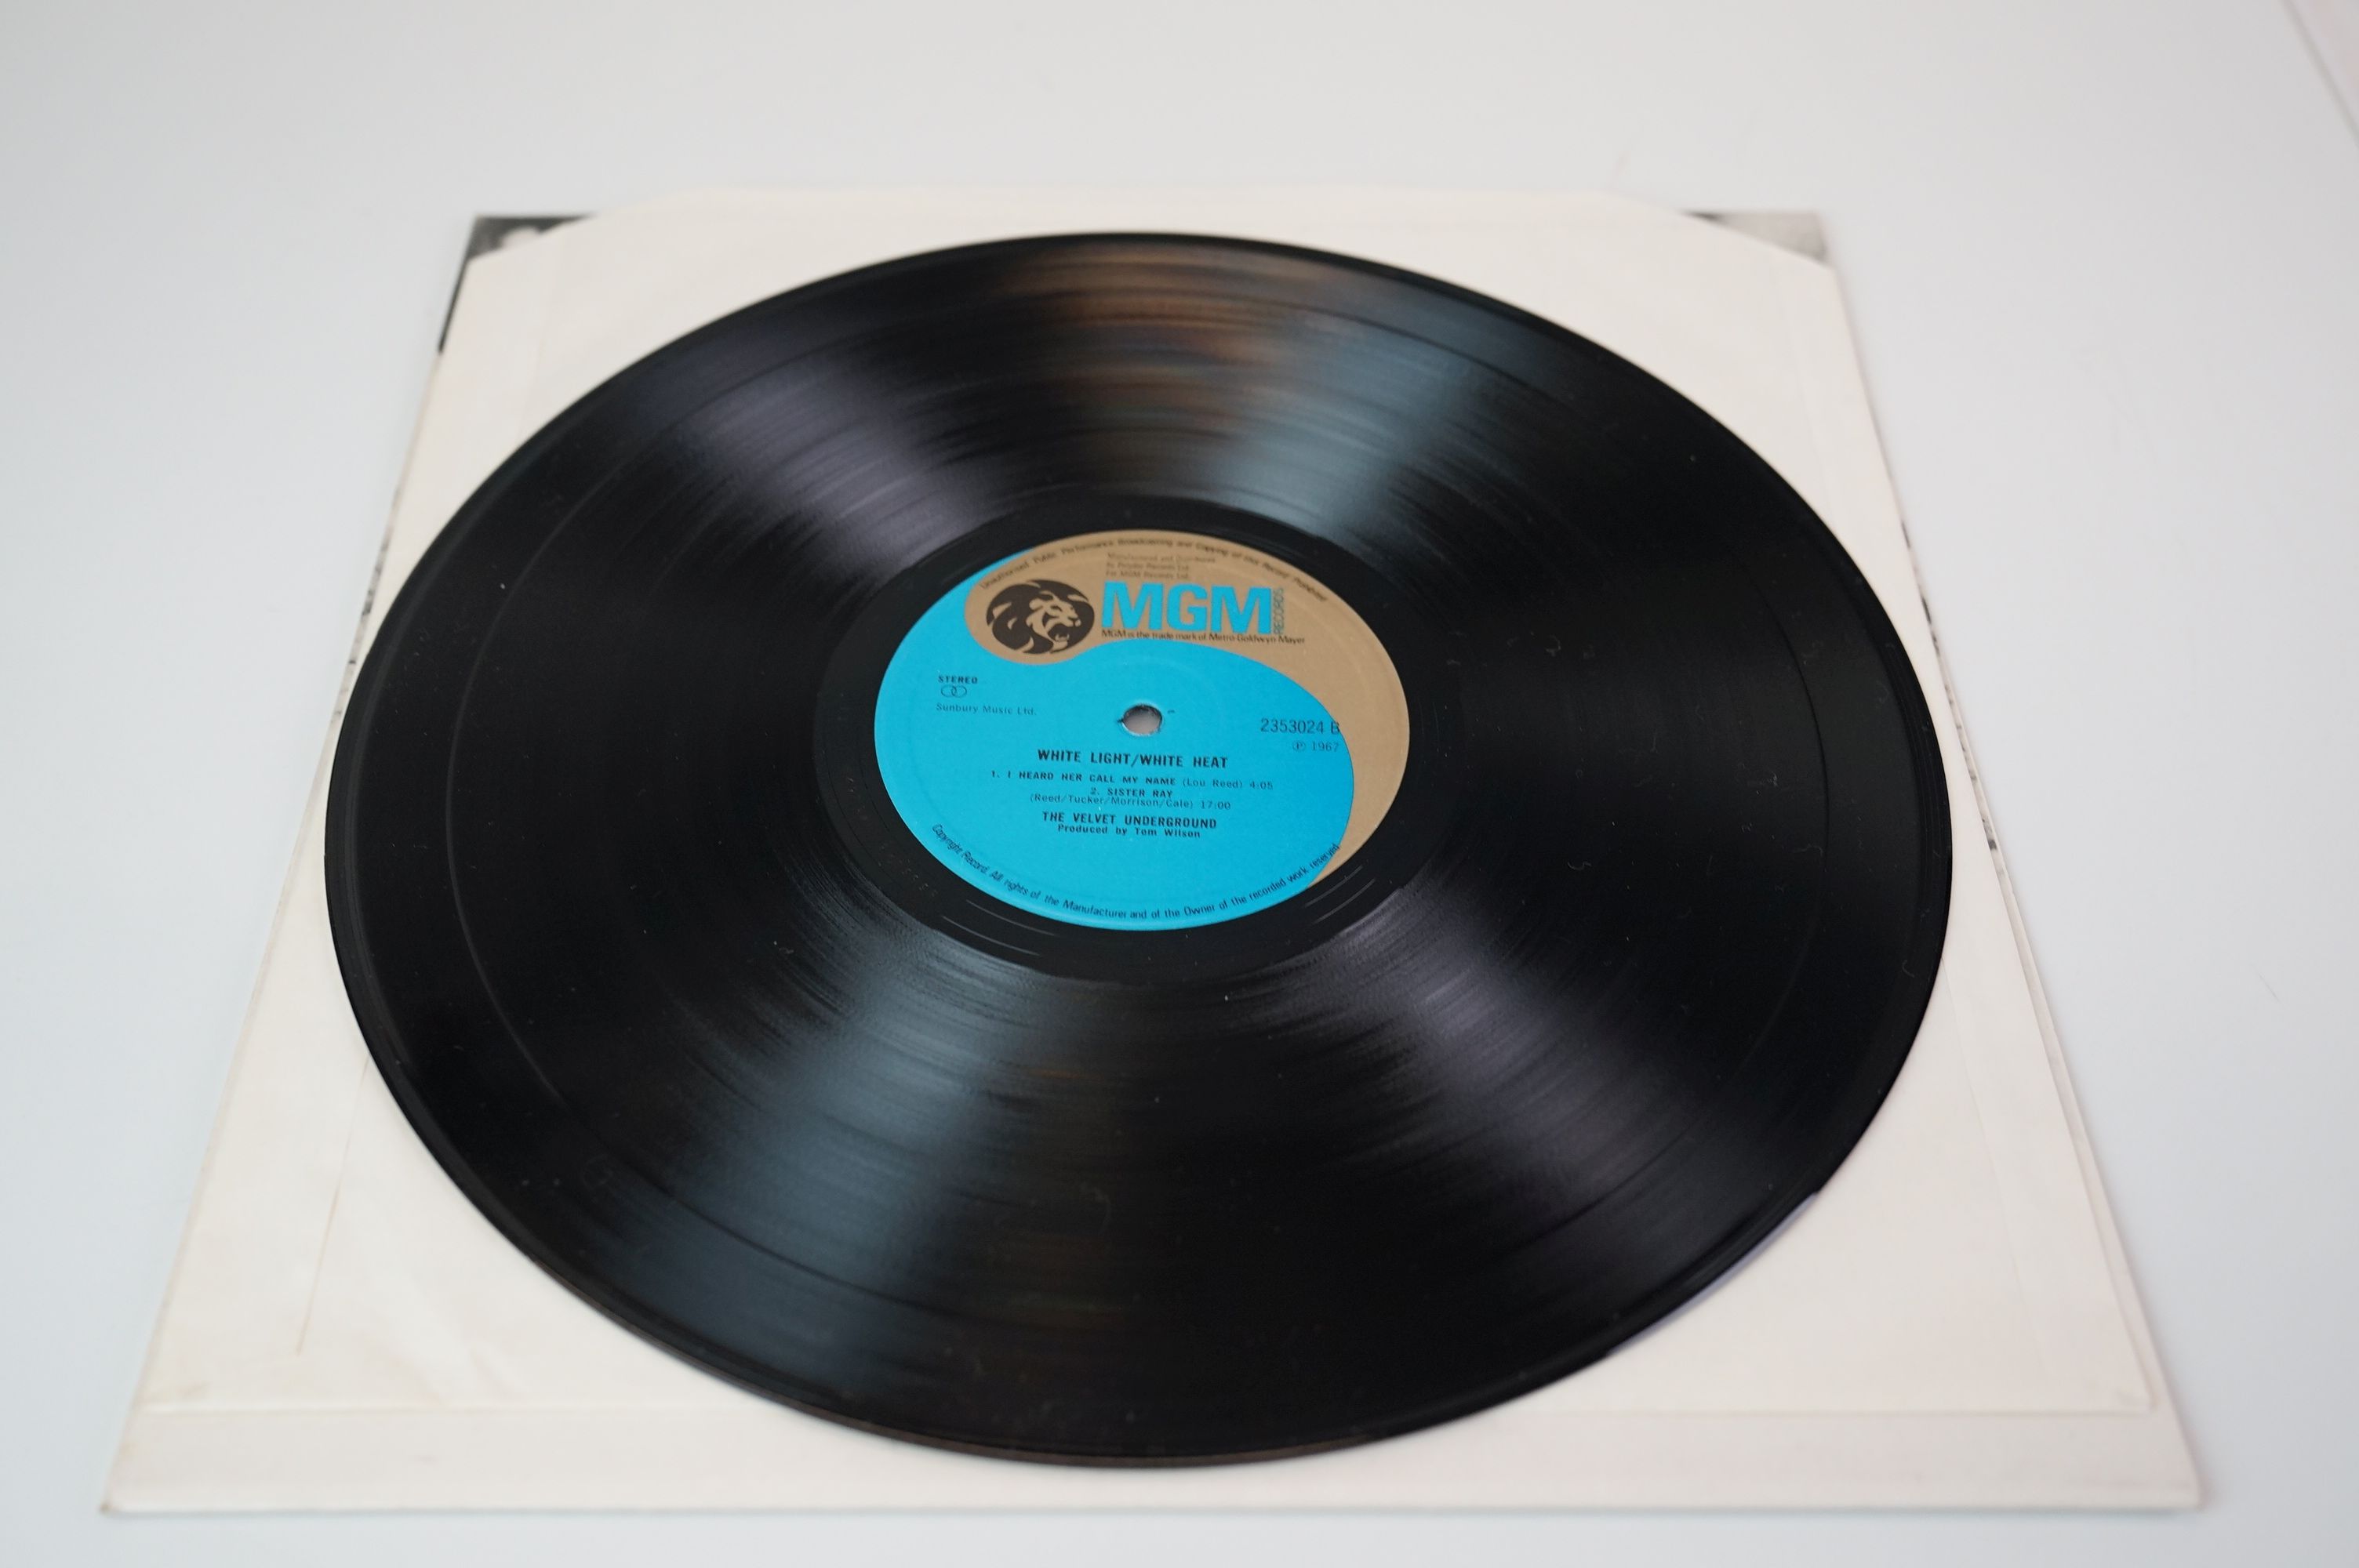 Vinyl - Four Velvet Underground LPs to include White Light/White Heat MGM 2353024, Loaded ( - Image 23 of 31